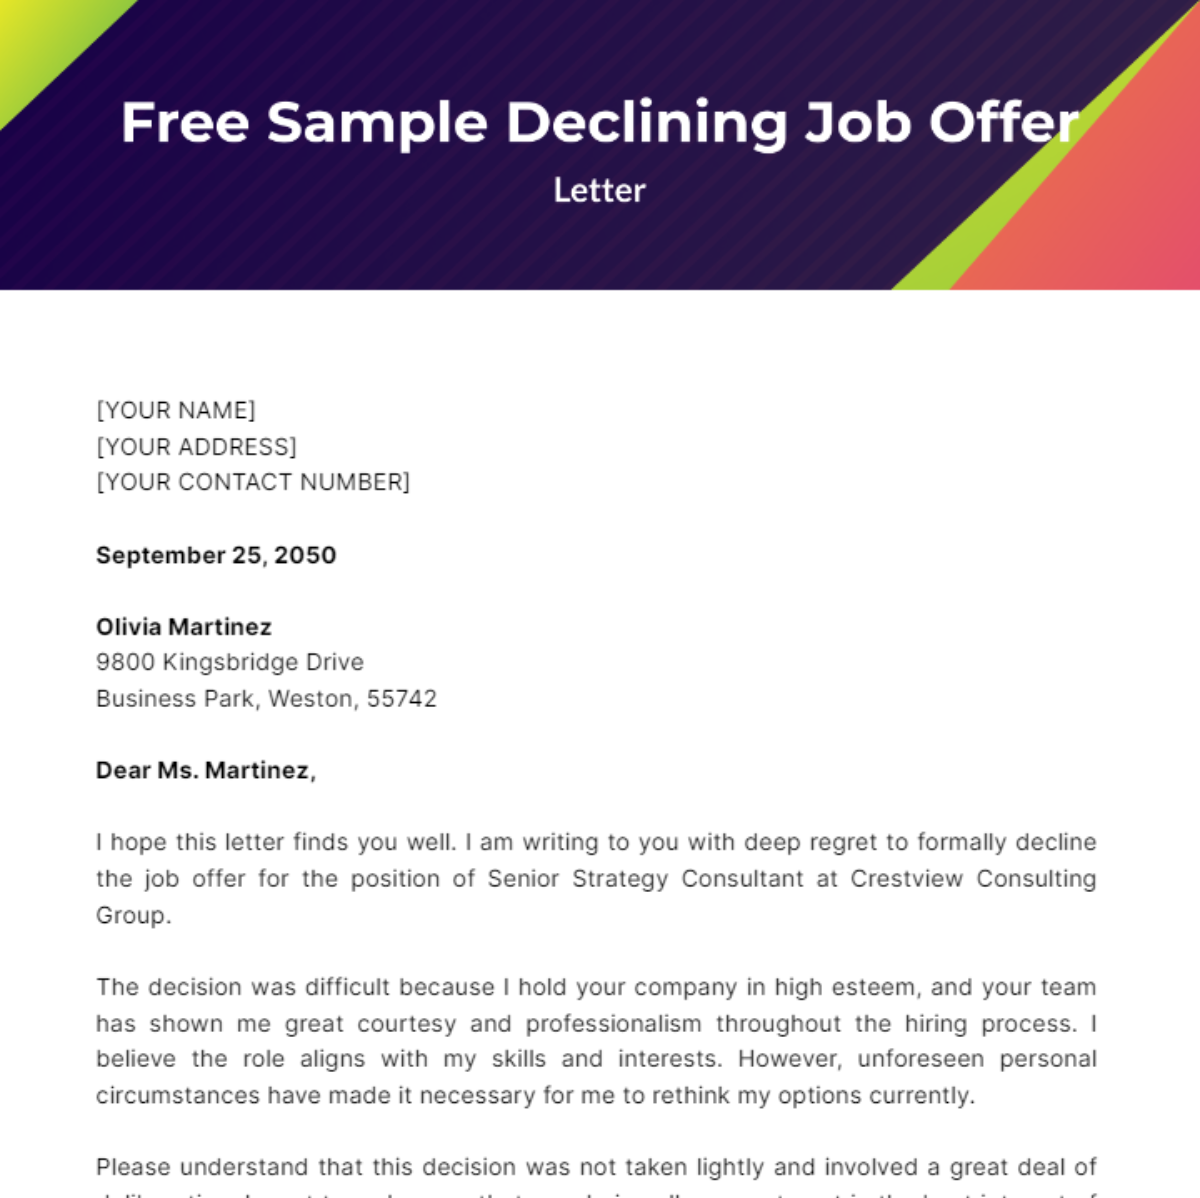 Sample Declining Job Offer Letter Template